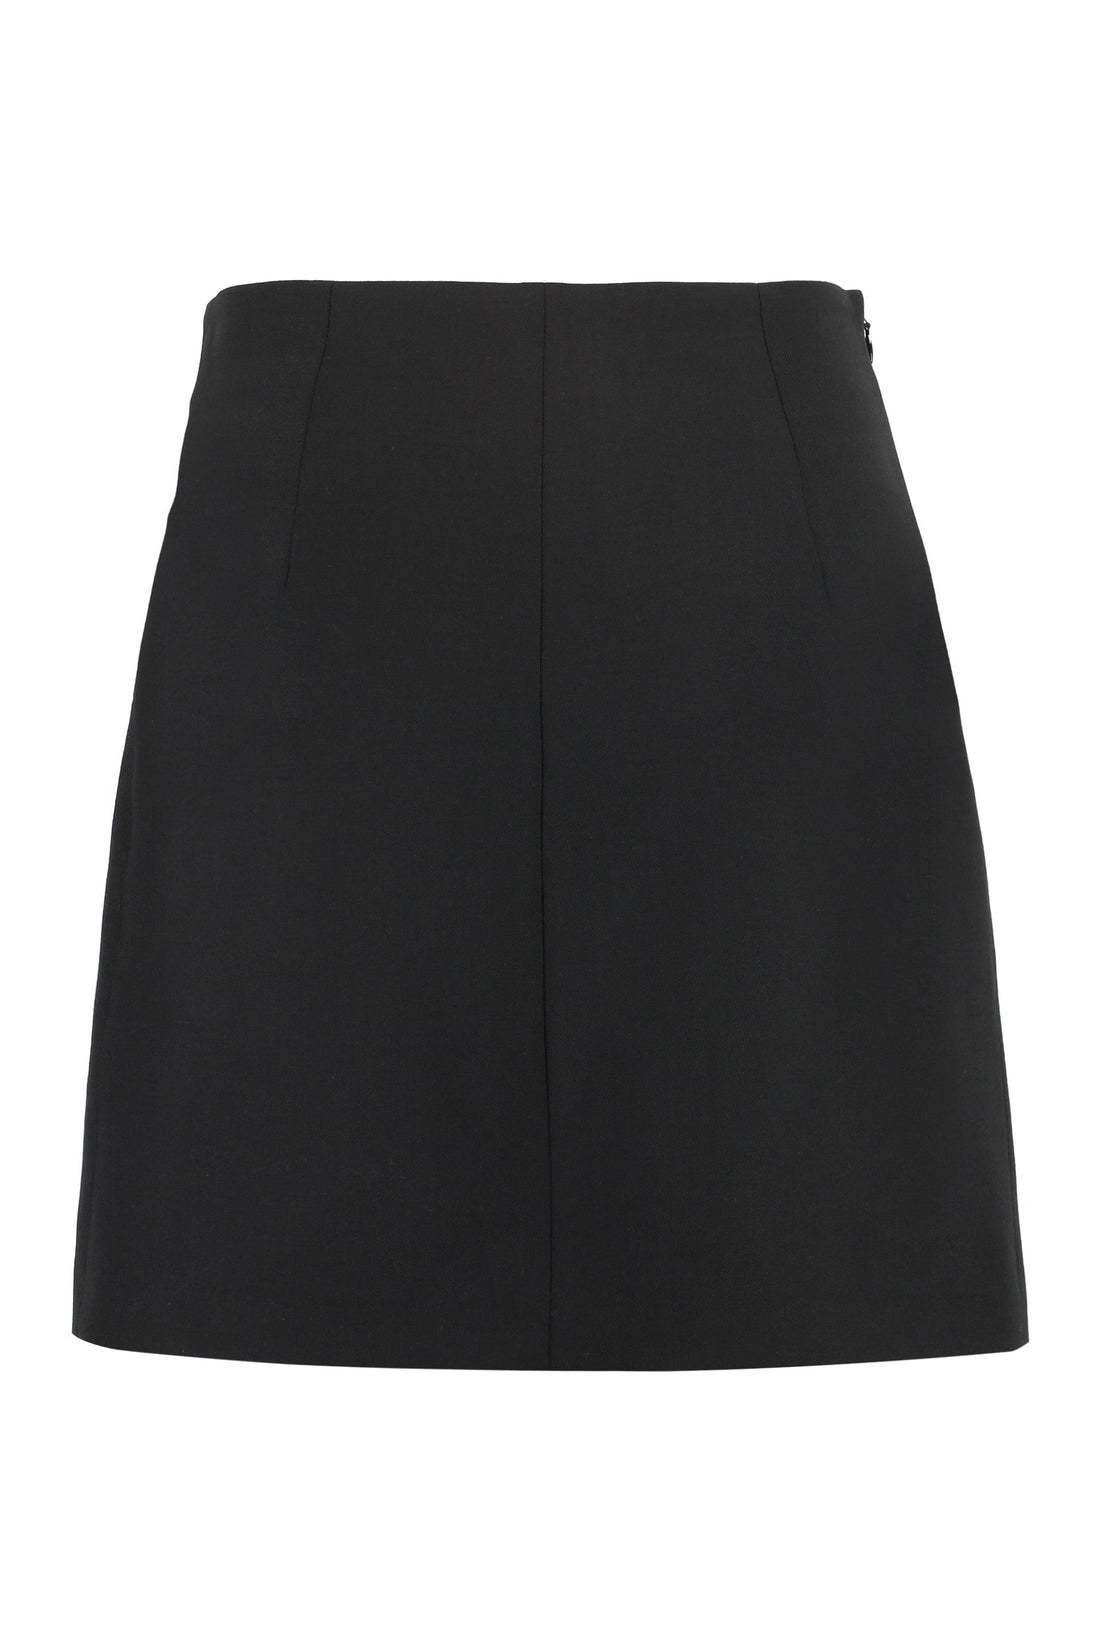 Off-White-OUTLET-SALE-Wool blend miniskirt-ARCHIVIST